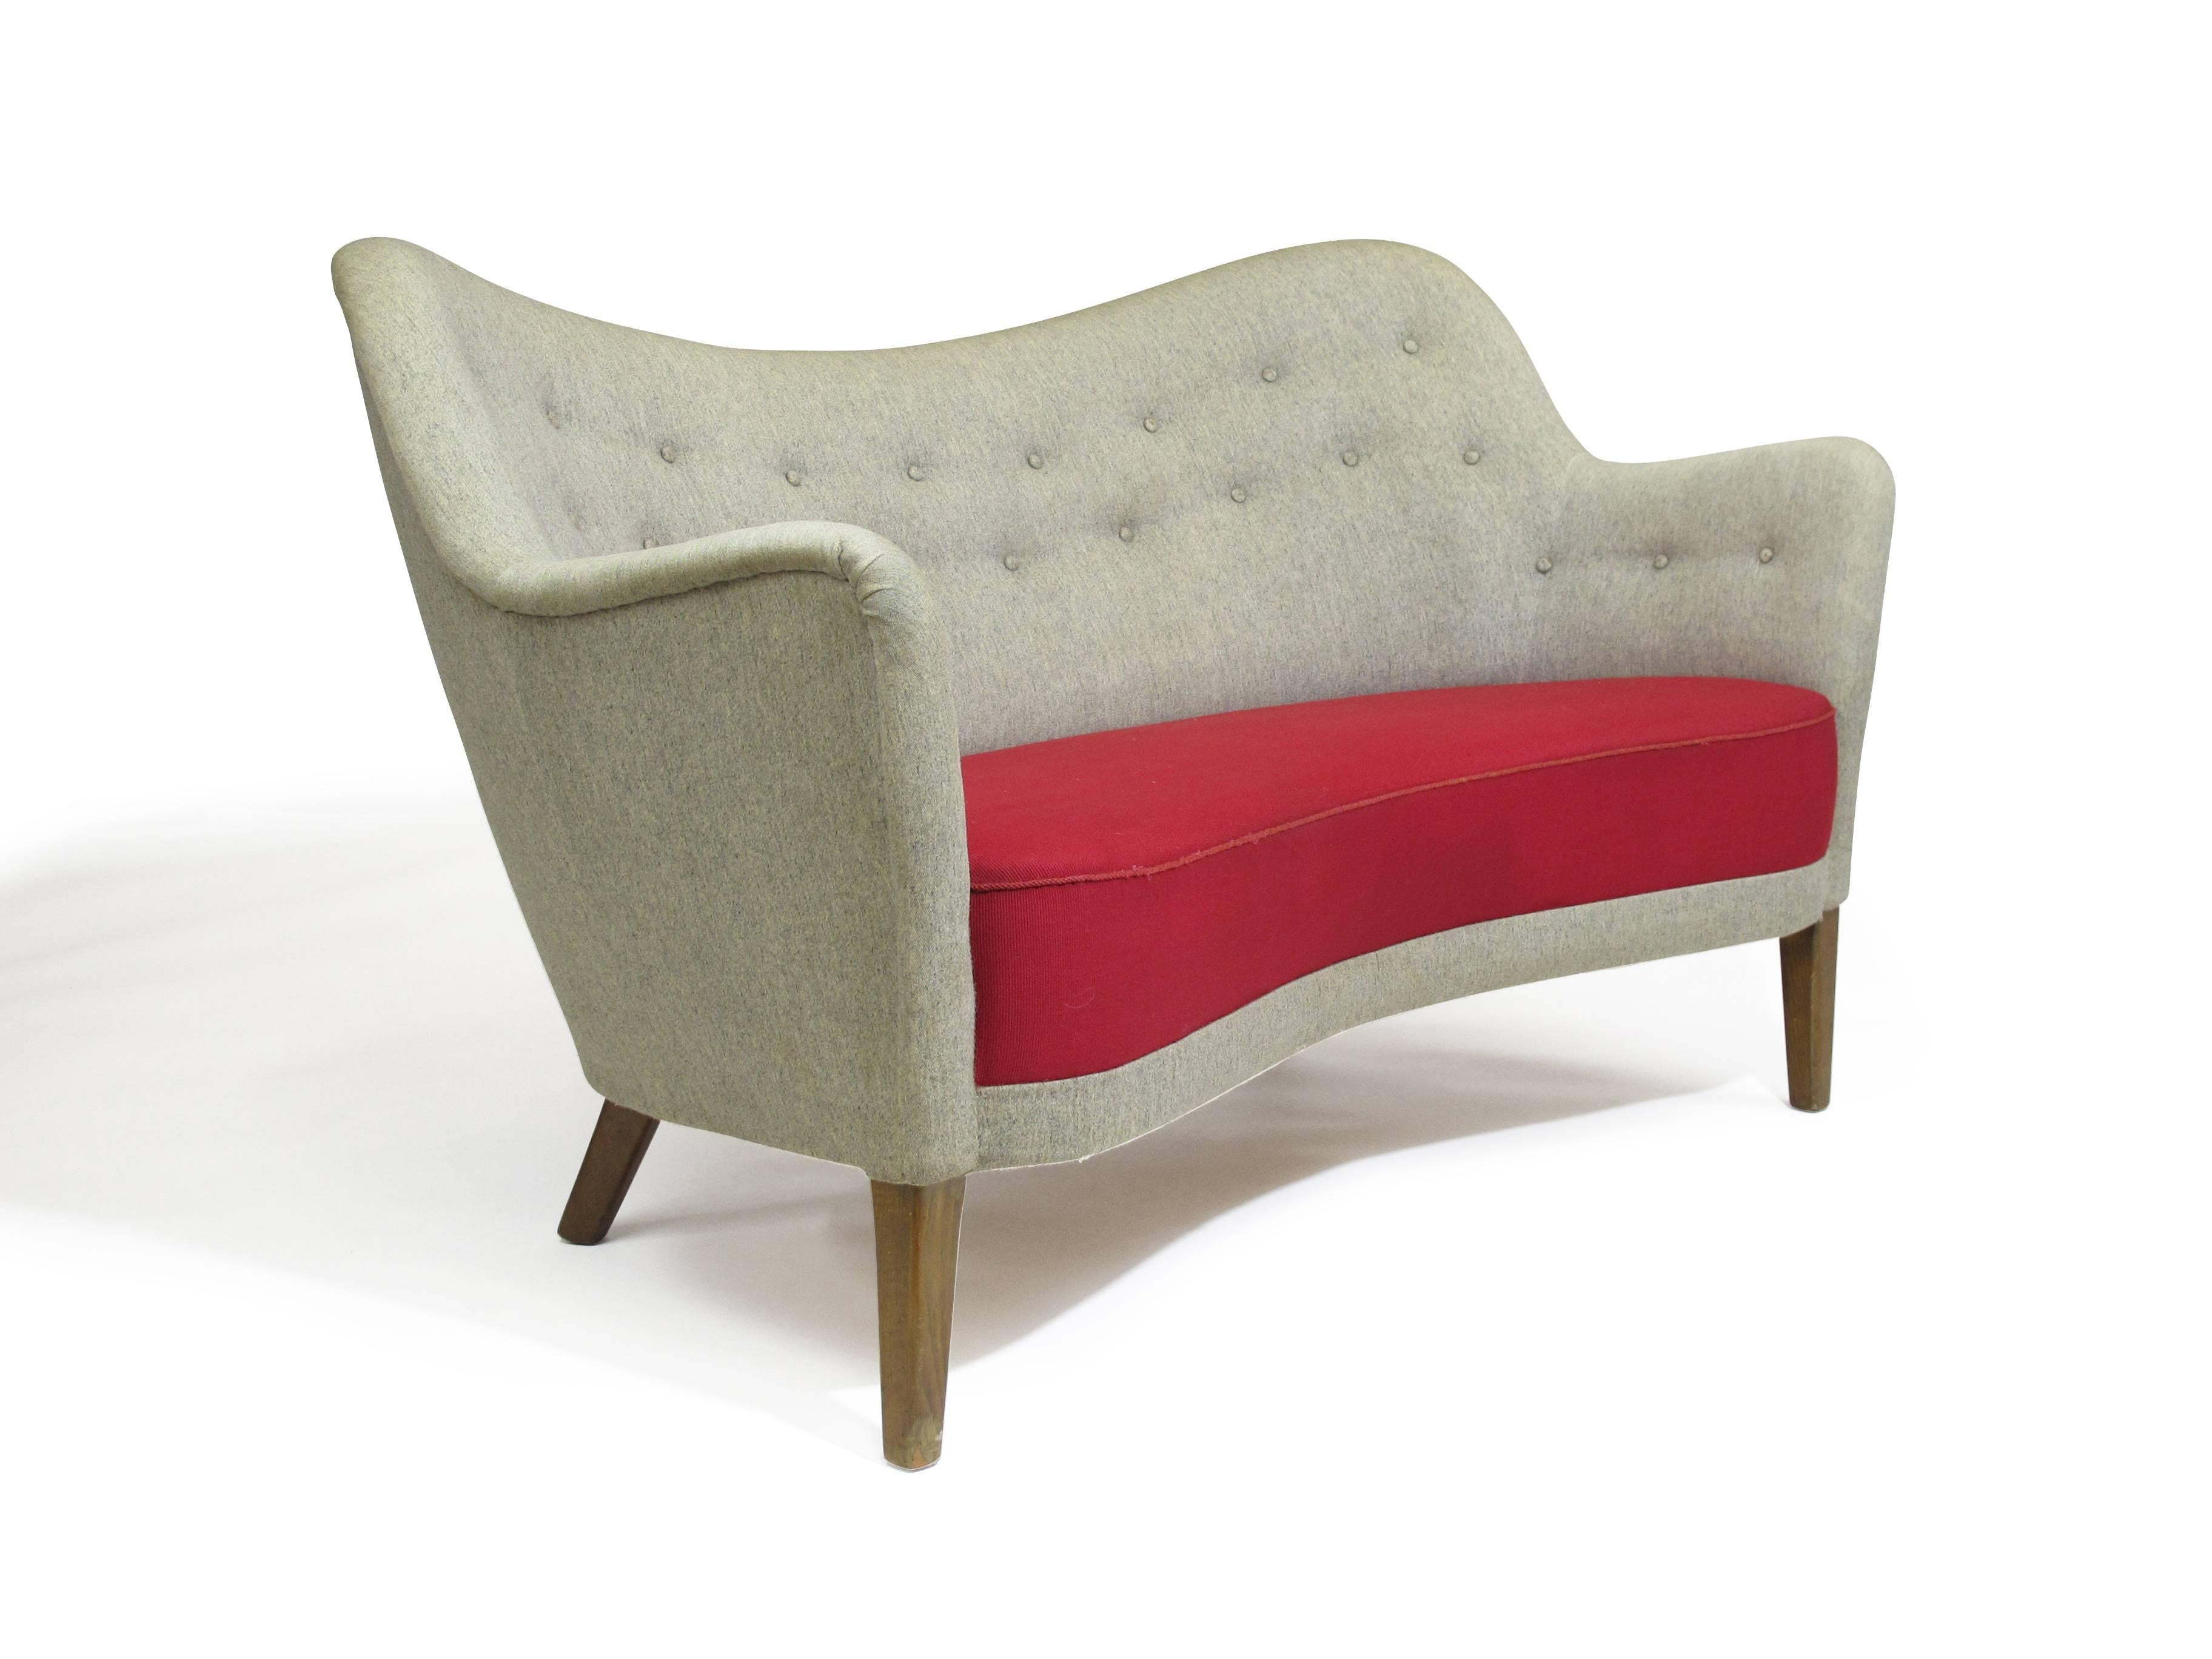 Danish loveseat sofa in manner Finn Juhl BO-55 by Carl Brorup. 
Original wool fabric in good condition.